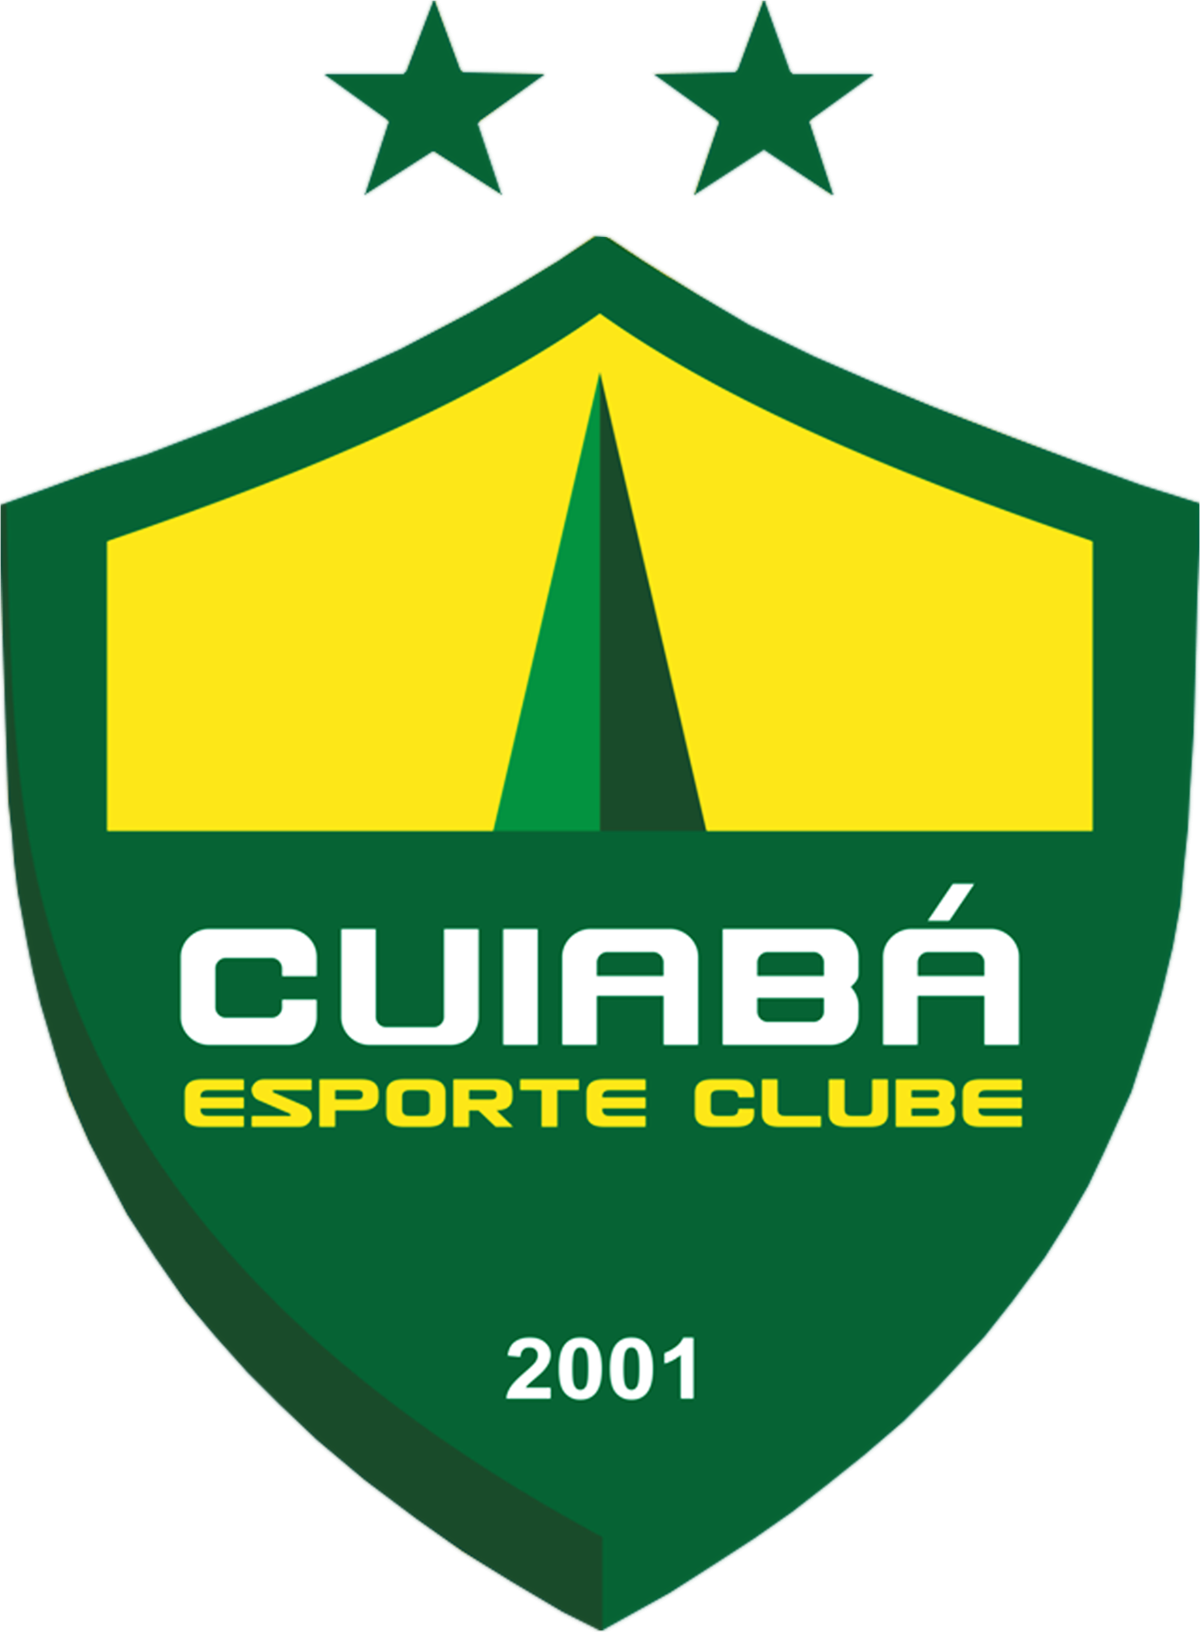 Cuiaba U-23 logo